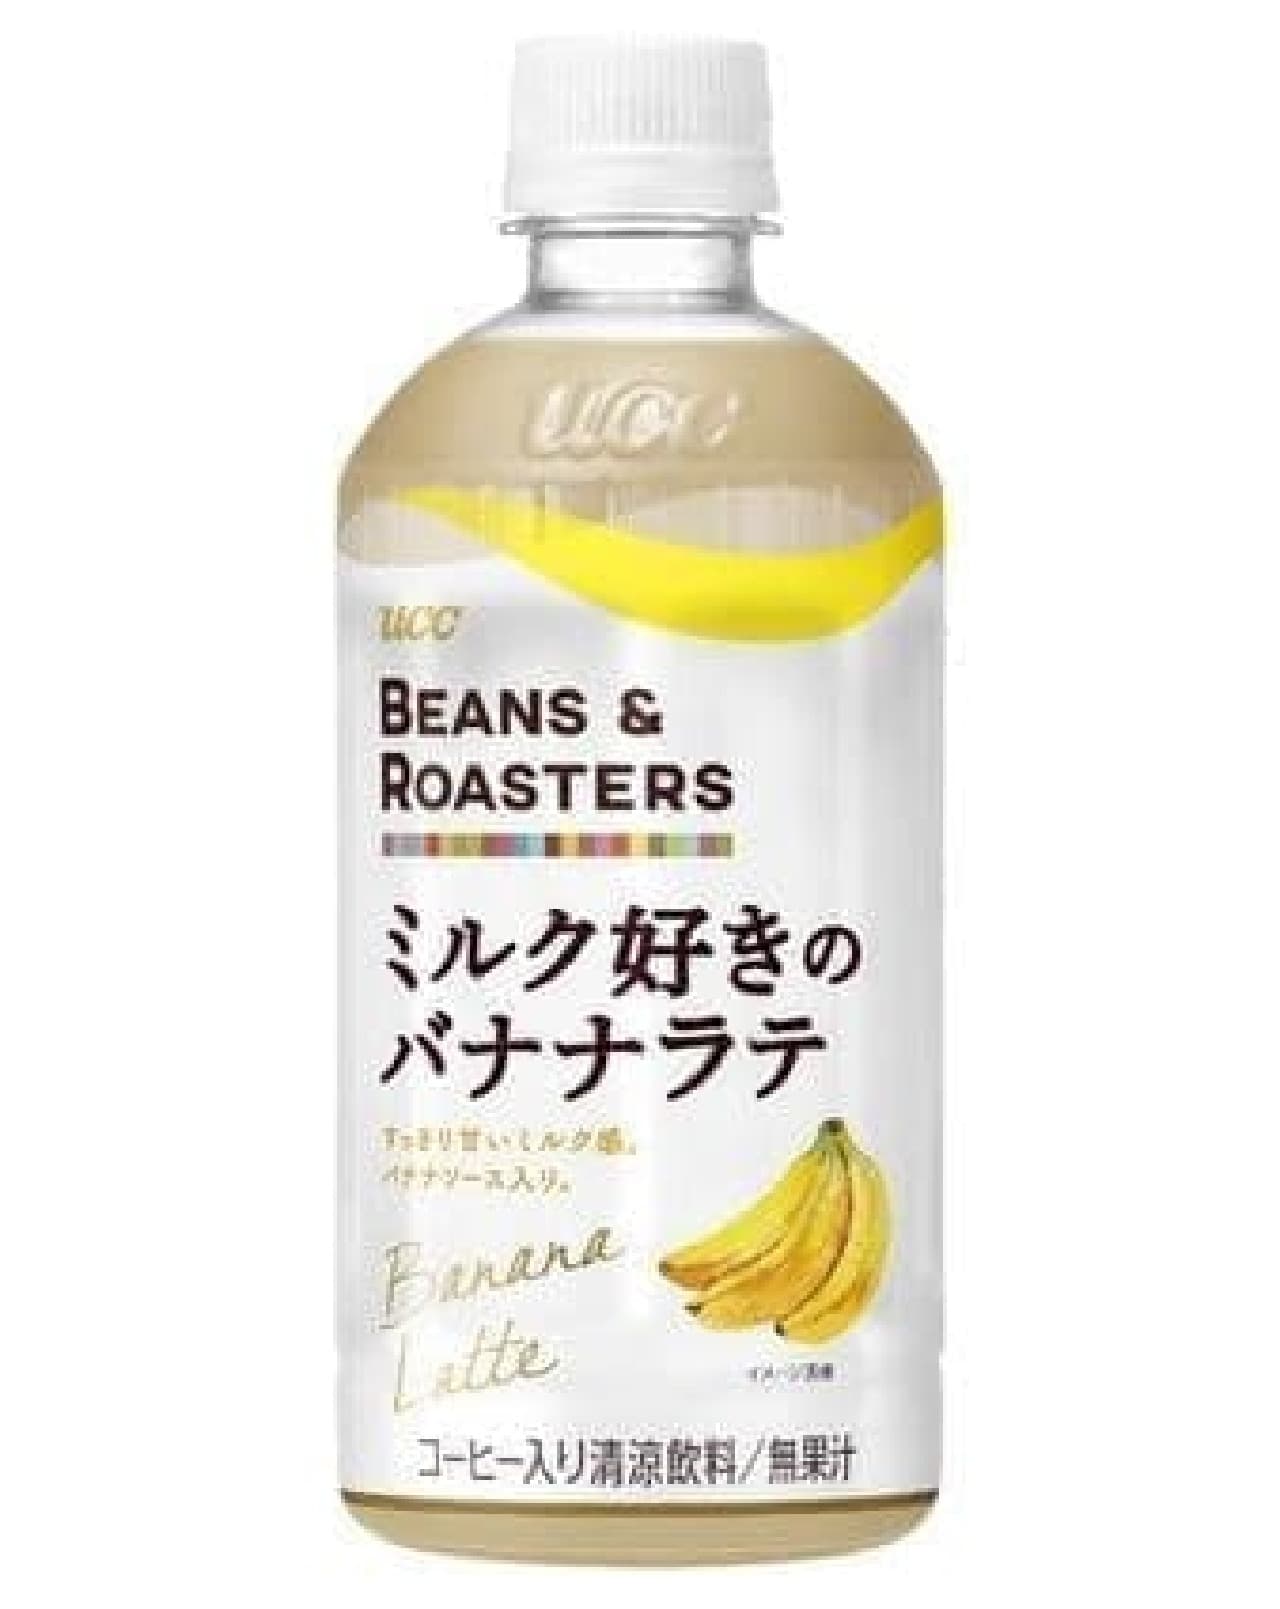 UCC BEANS & ROASTERS Milk-loving banana latte PET450ml